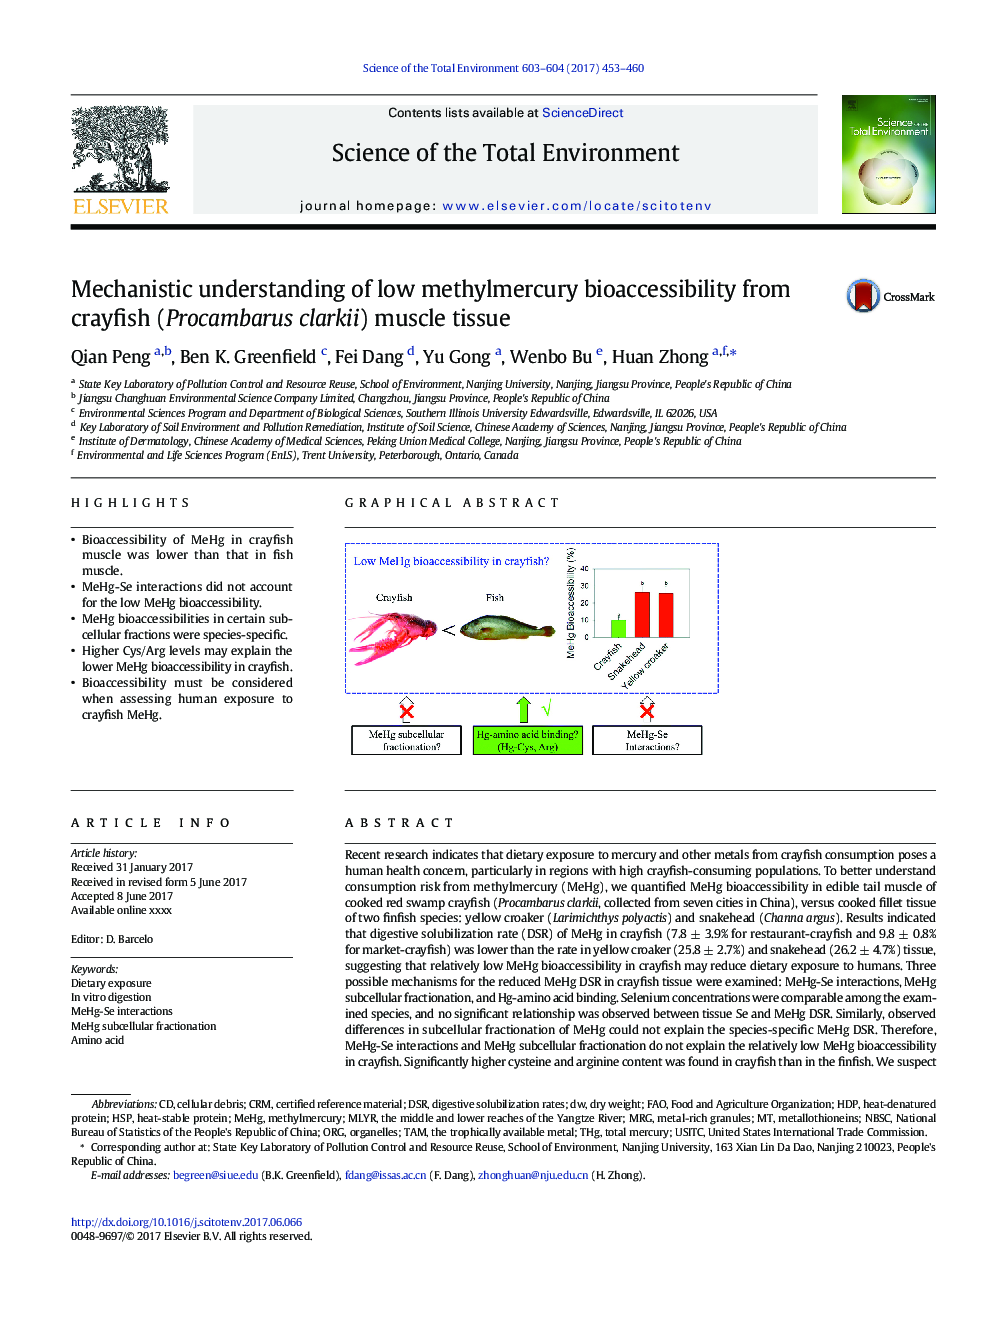 Mechanistic understanding of low methylmercury bioaccessibility from crayfish (Procambarus clarkii) muscle tissue